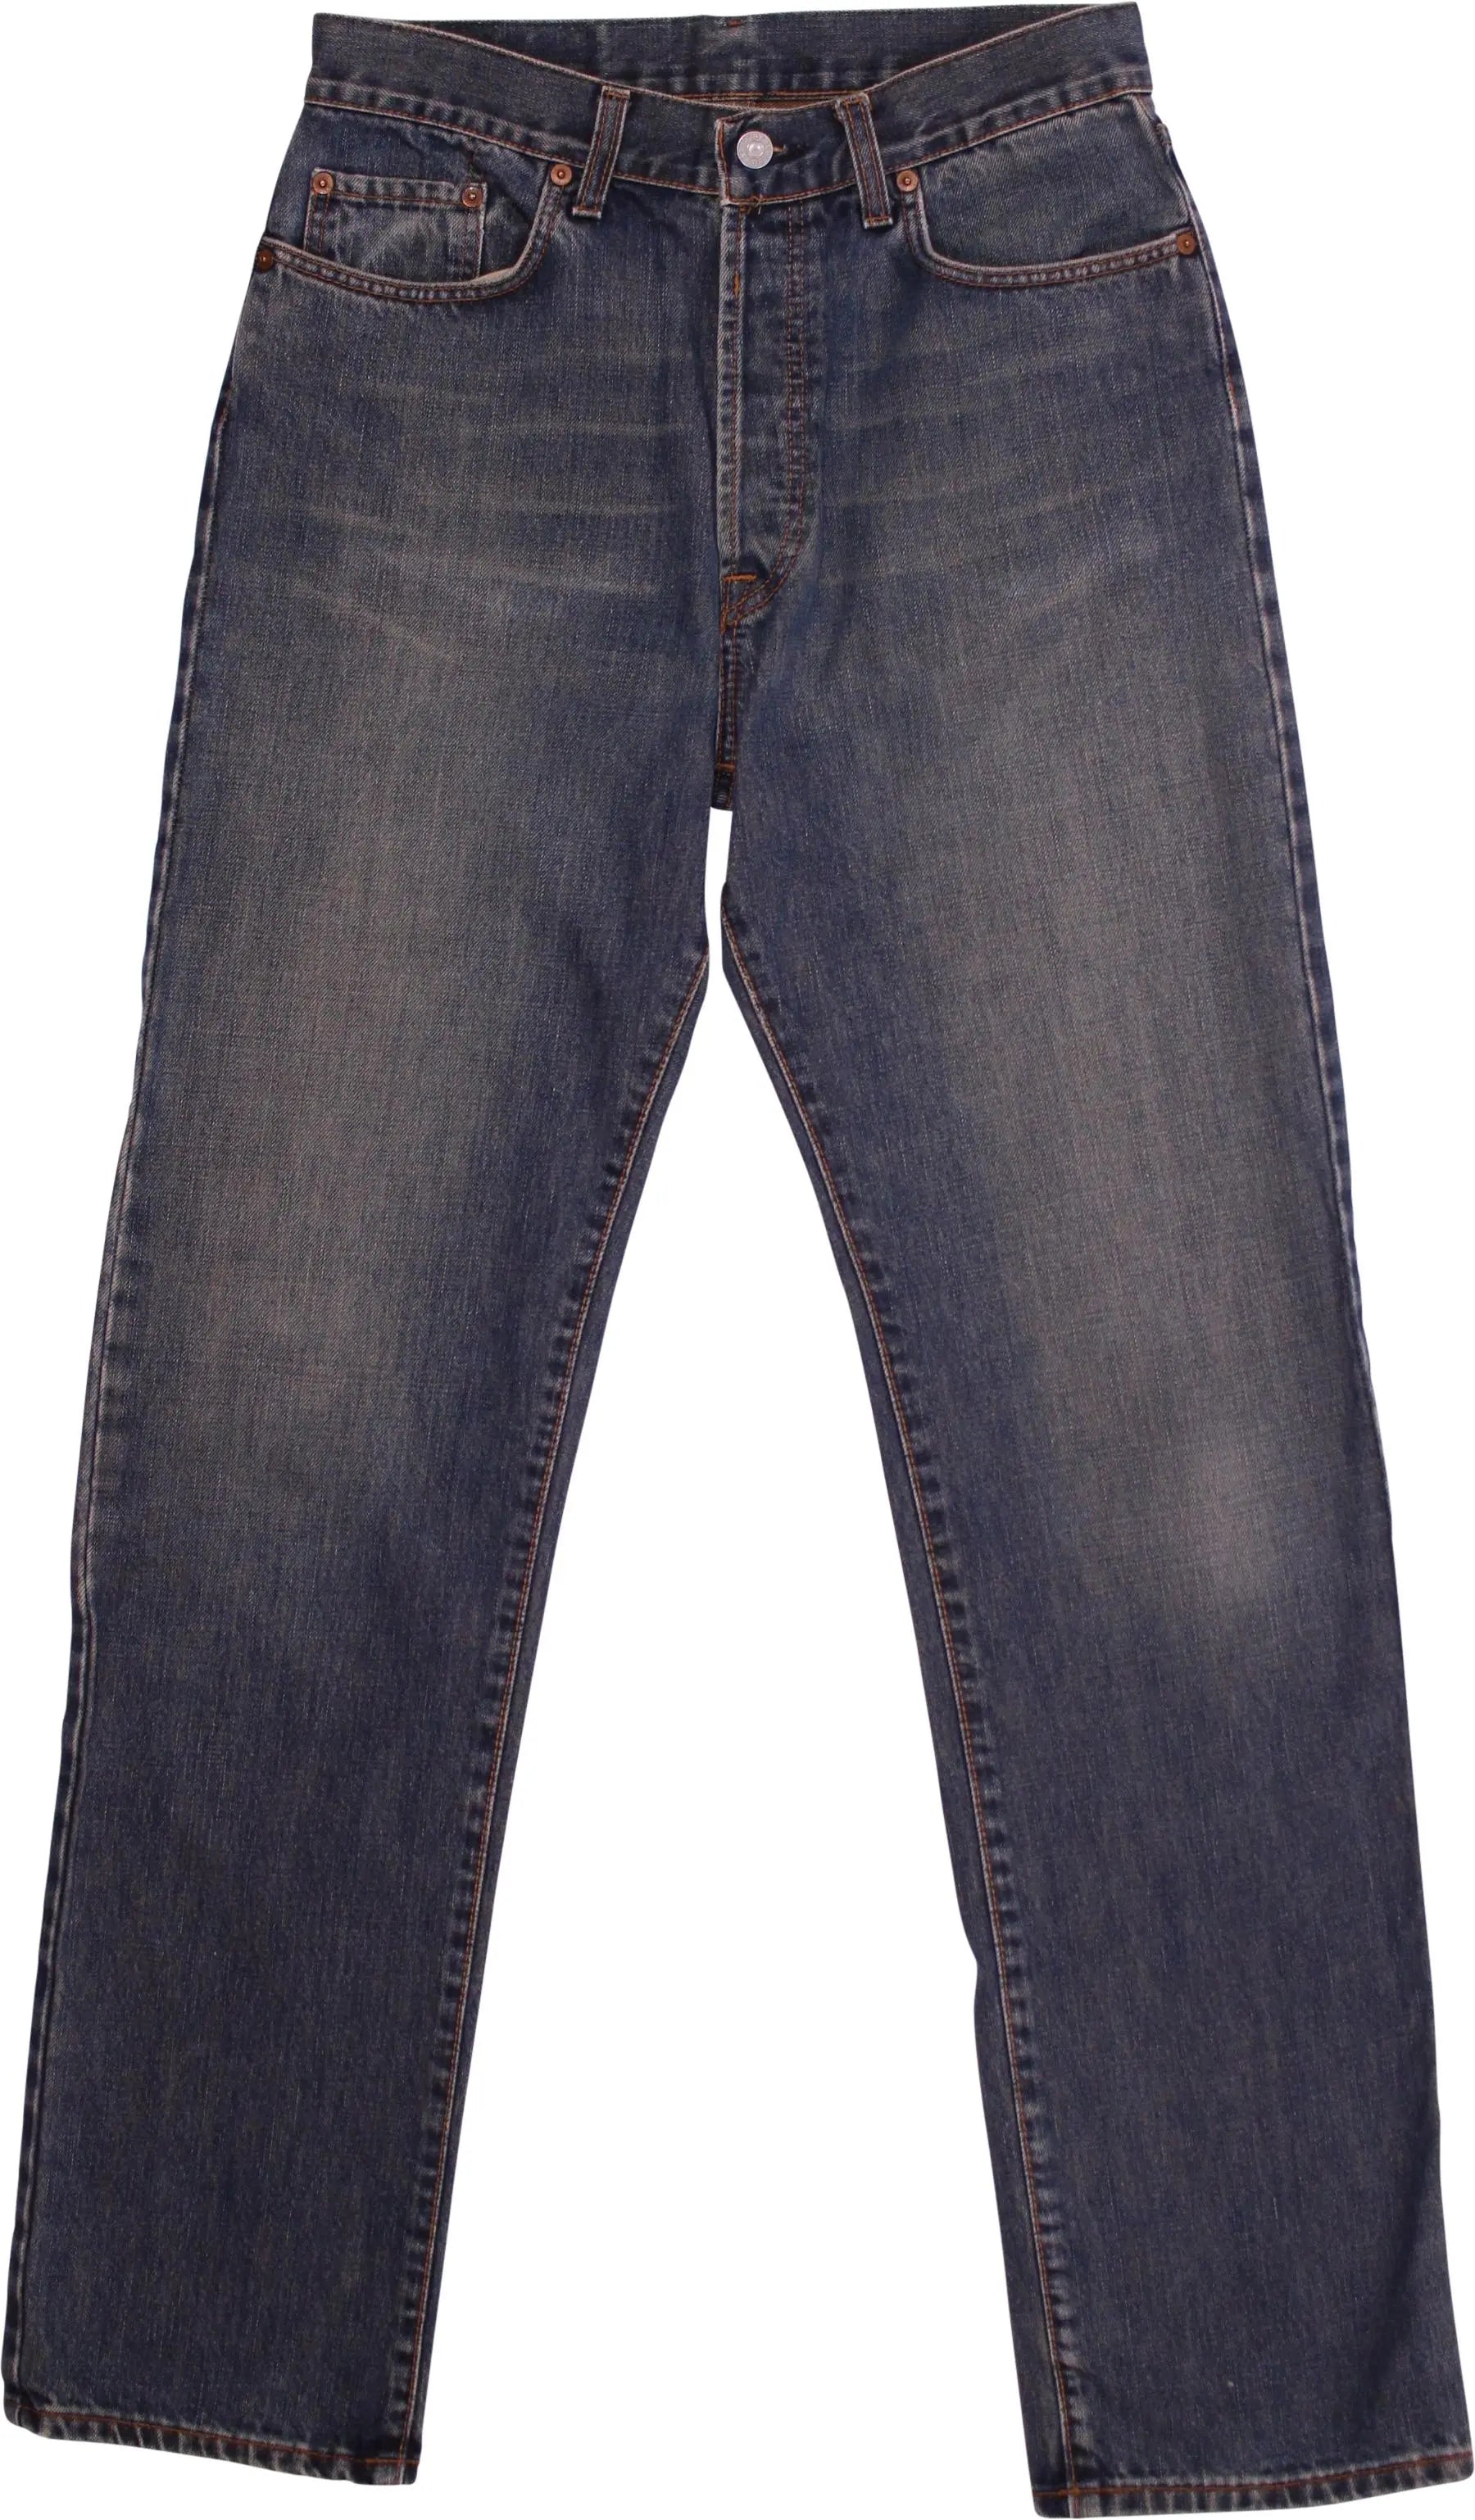 Casucci - Casucci Jeans- ThriftTale.com - Vintage and second handclothing